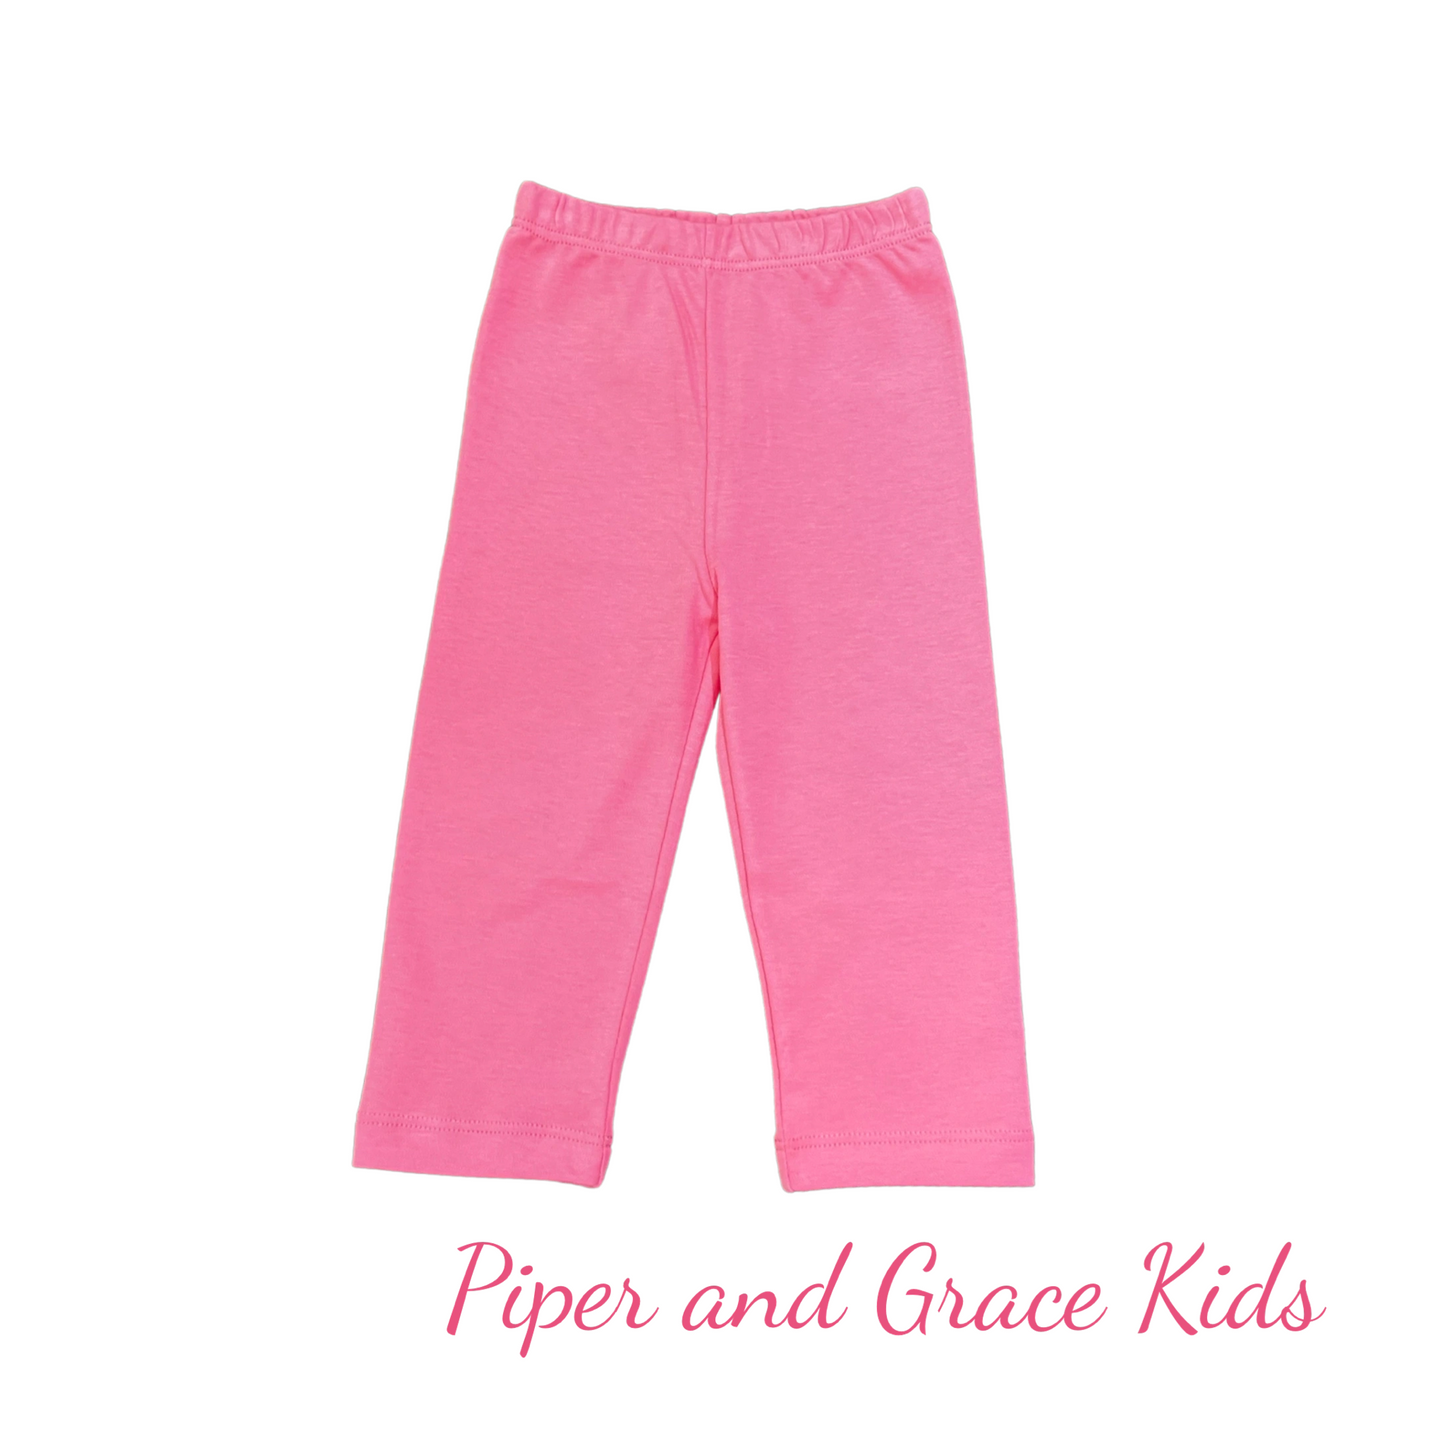 Squiggles Infant/Toddler Leggings - Bubble Gum Pink - Pima Cotton